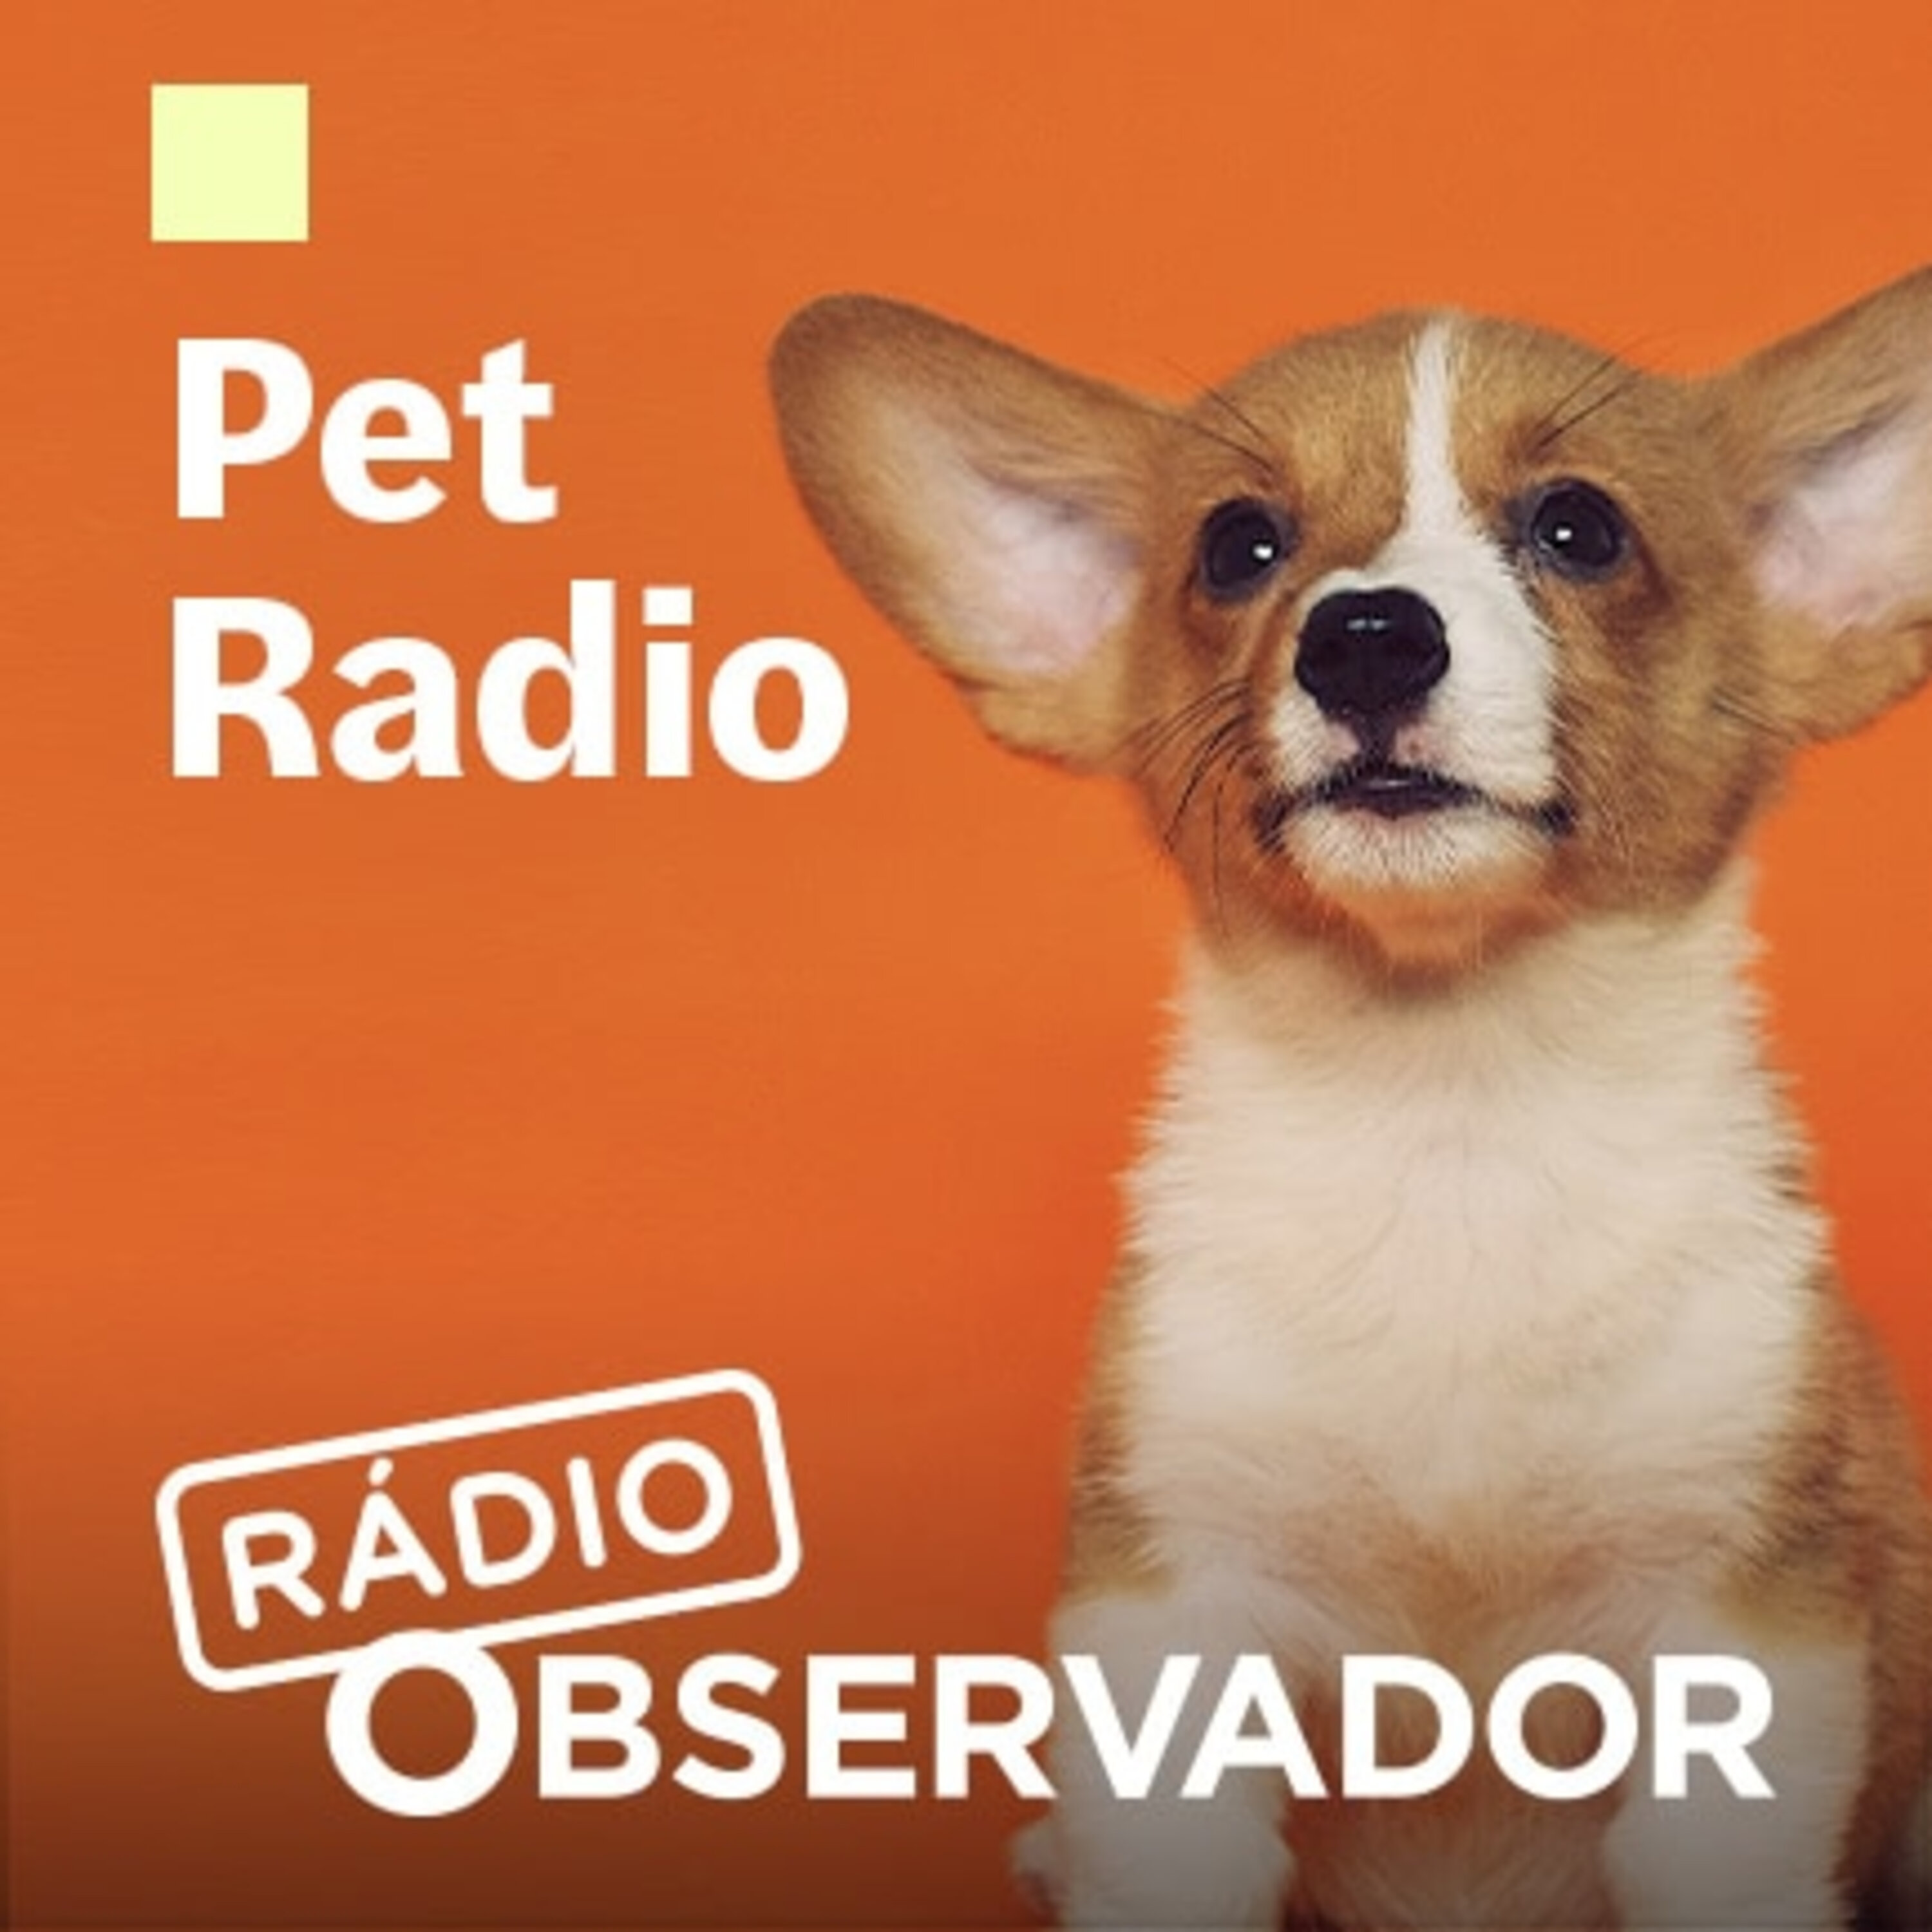 Radio pets. Радио и питомцы. Радио animal.